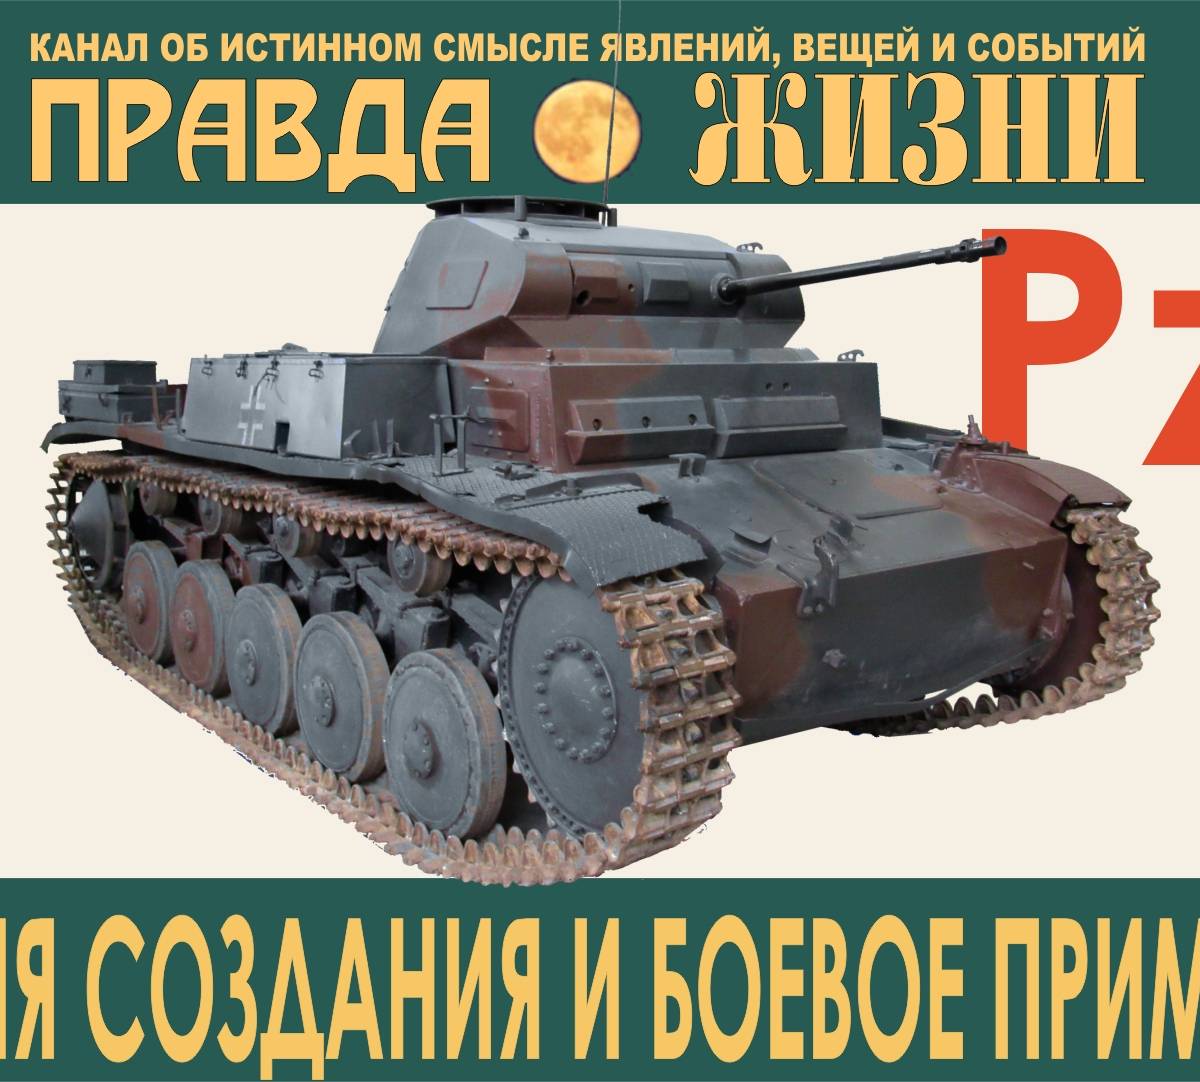 Panzerkampfwagen II, он же Т-II. Второй танк Вермахта